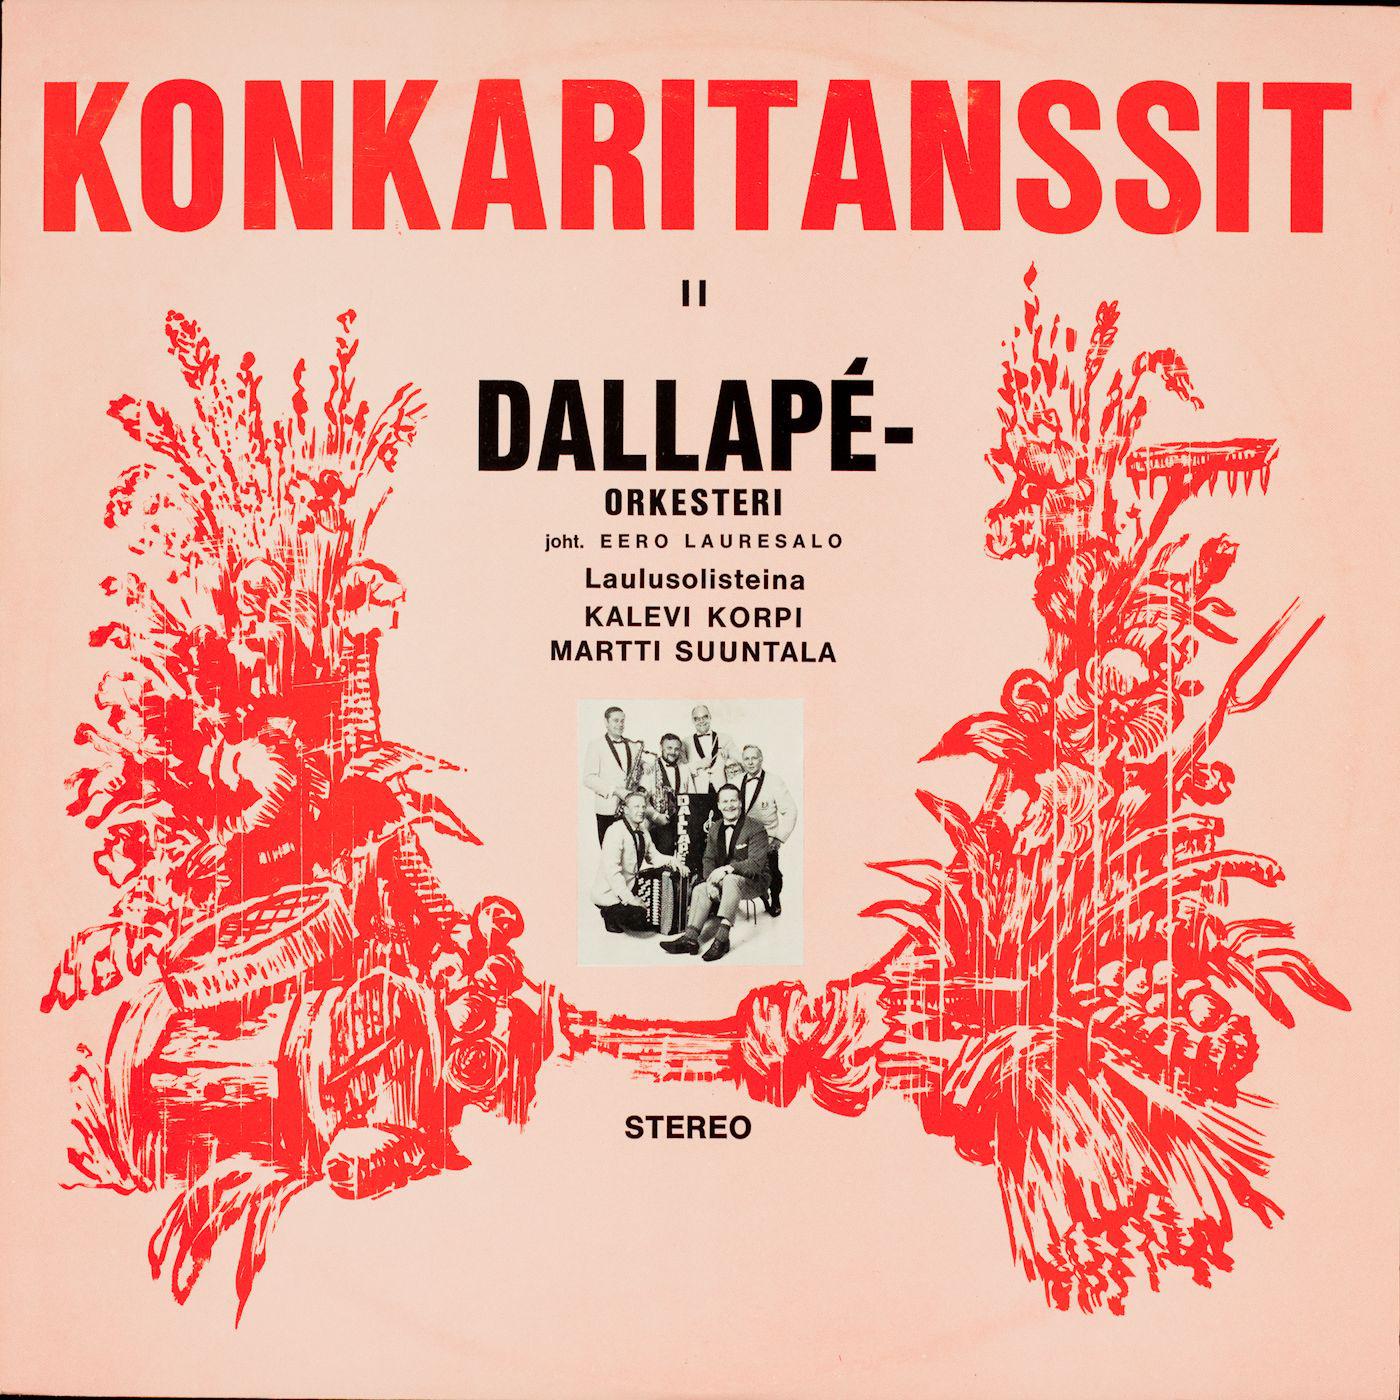 Dallapé-orkesteri - Käpylän jenkka